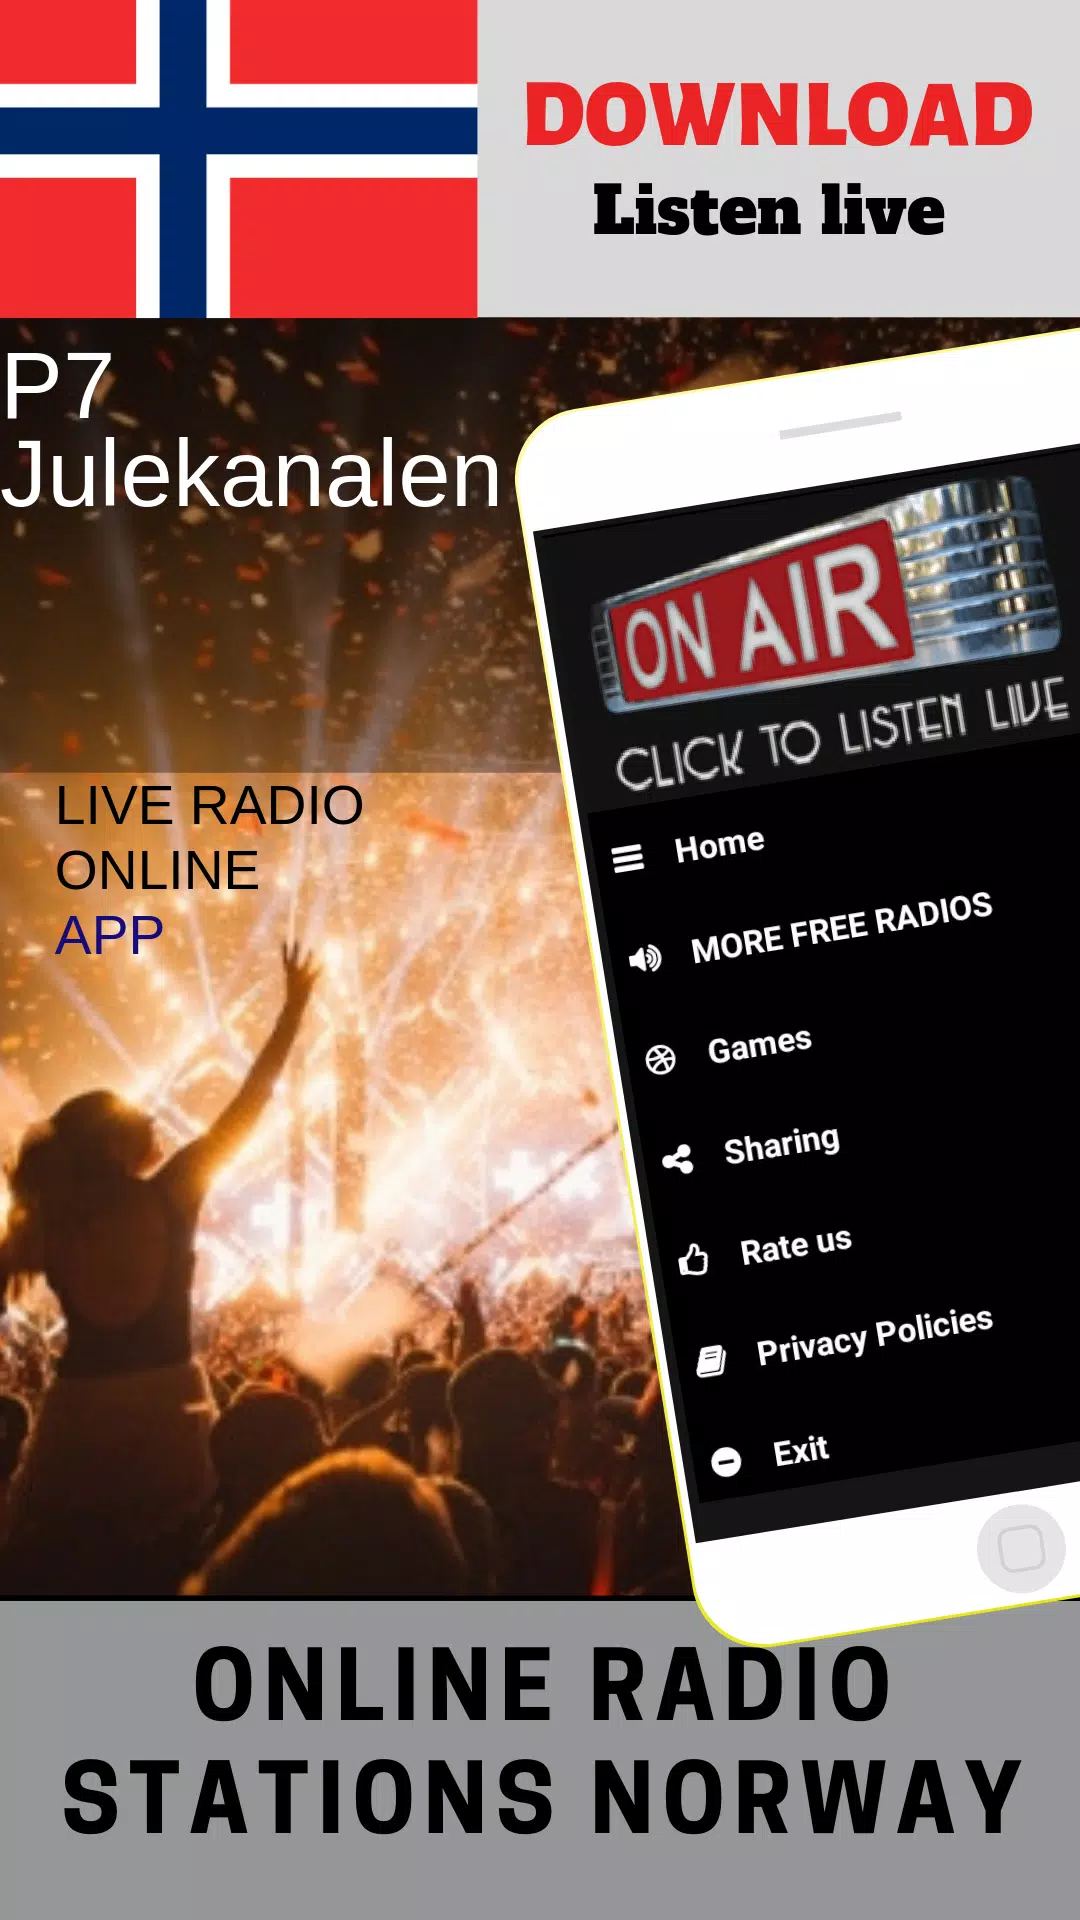 P7 Julekanalen Free Online APK for Android Download